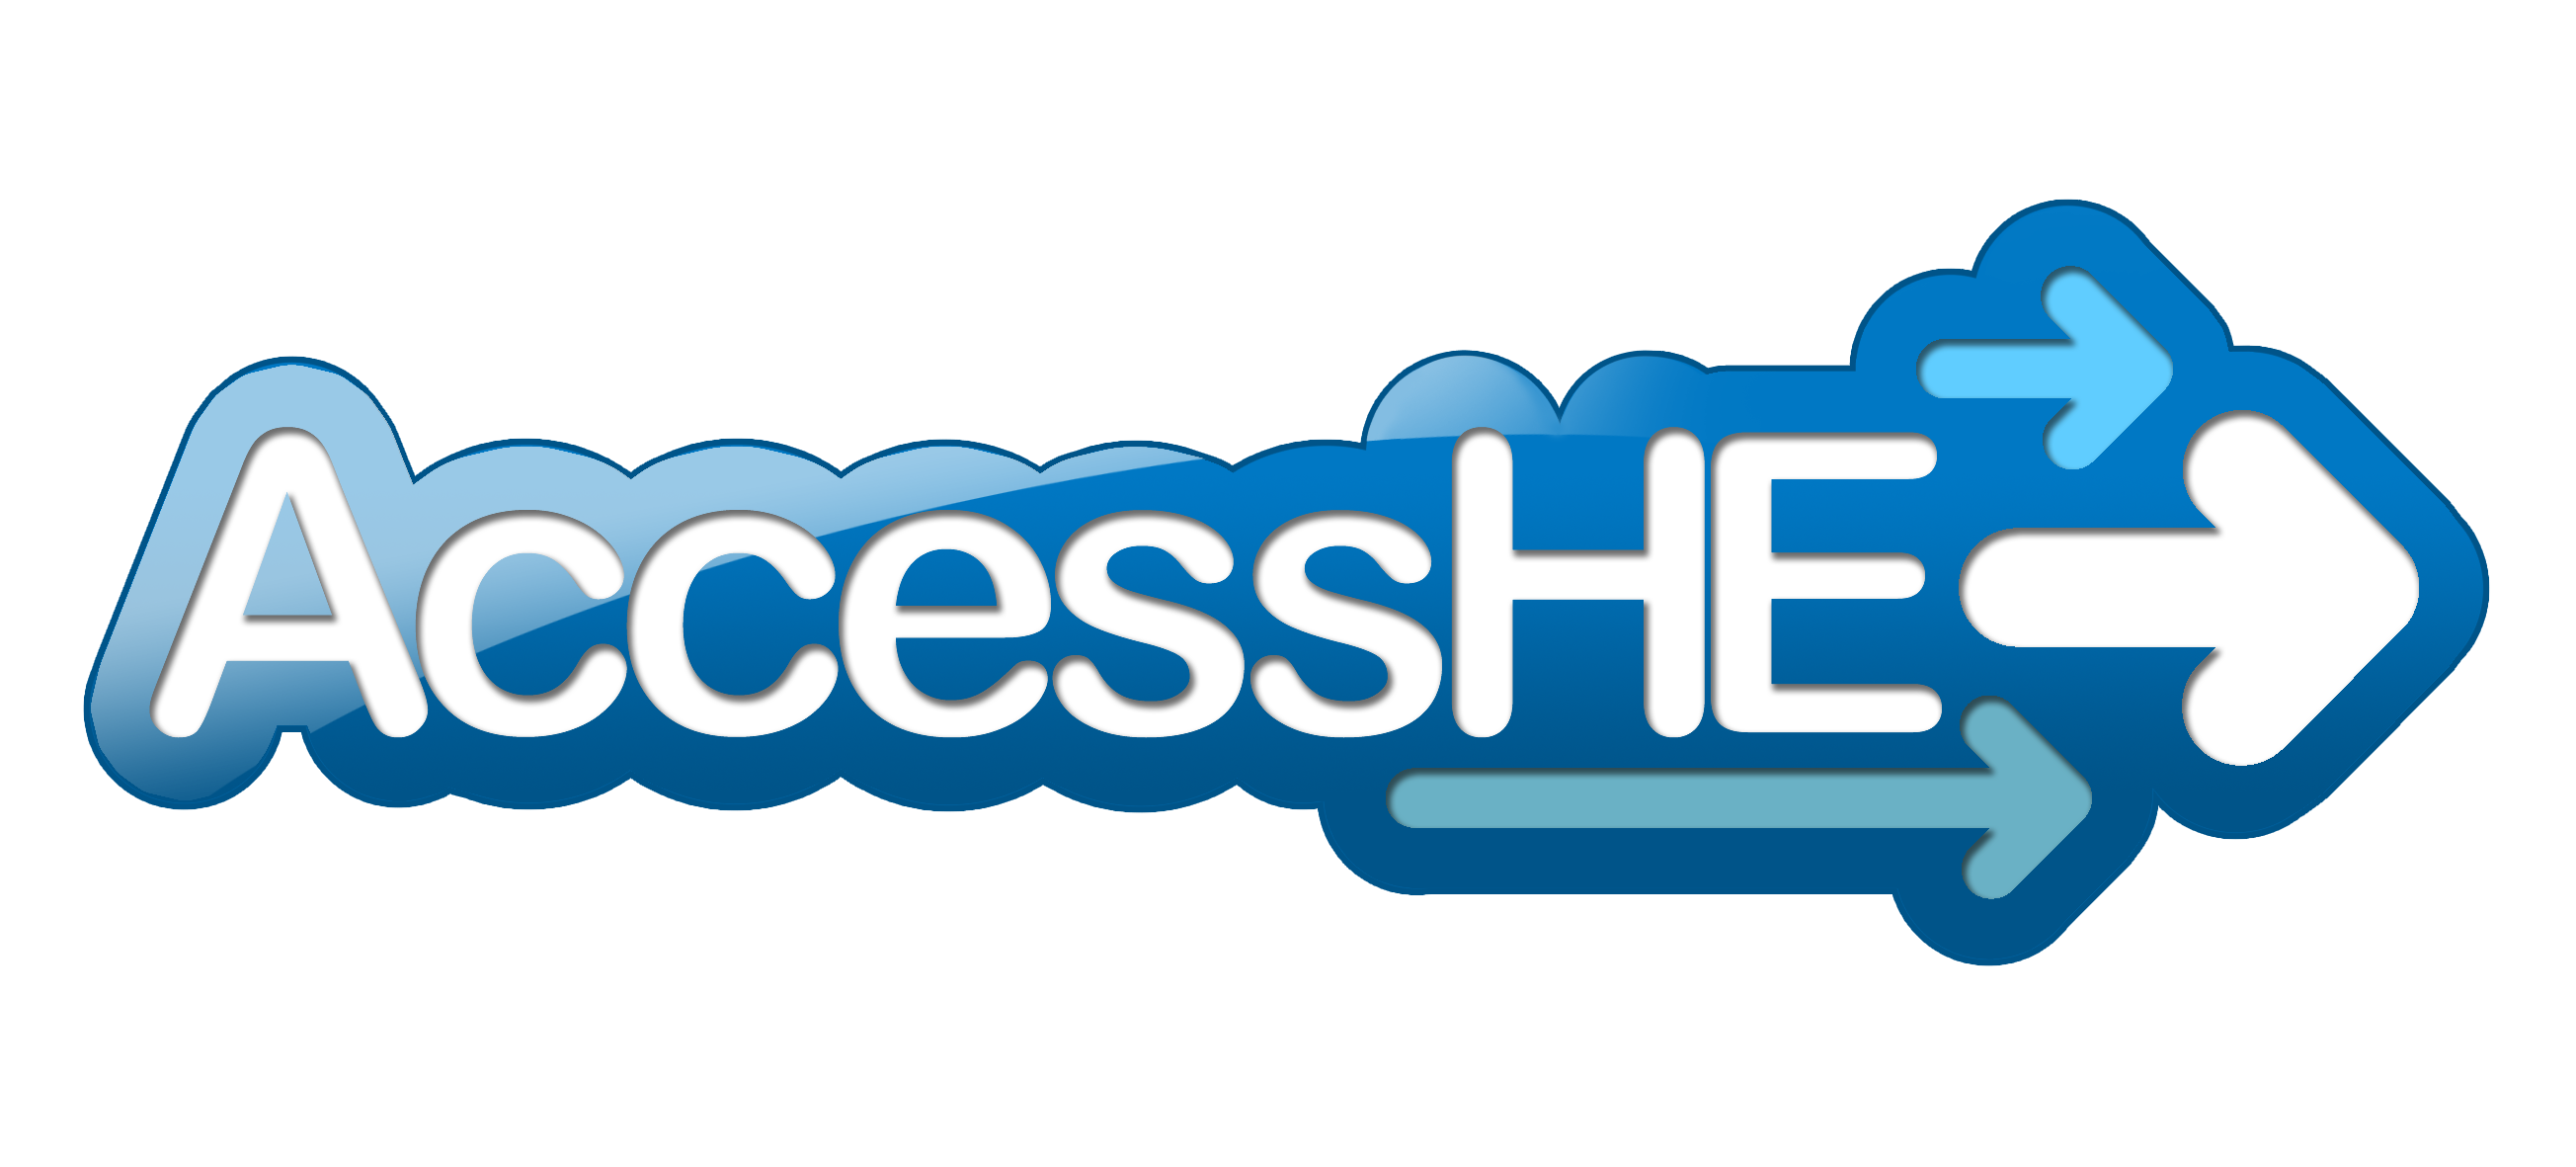 Access HE logo